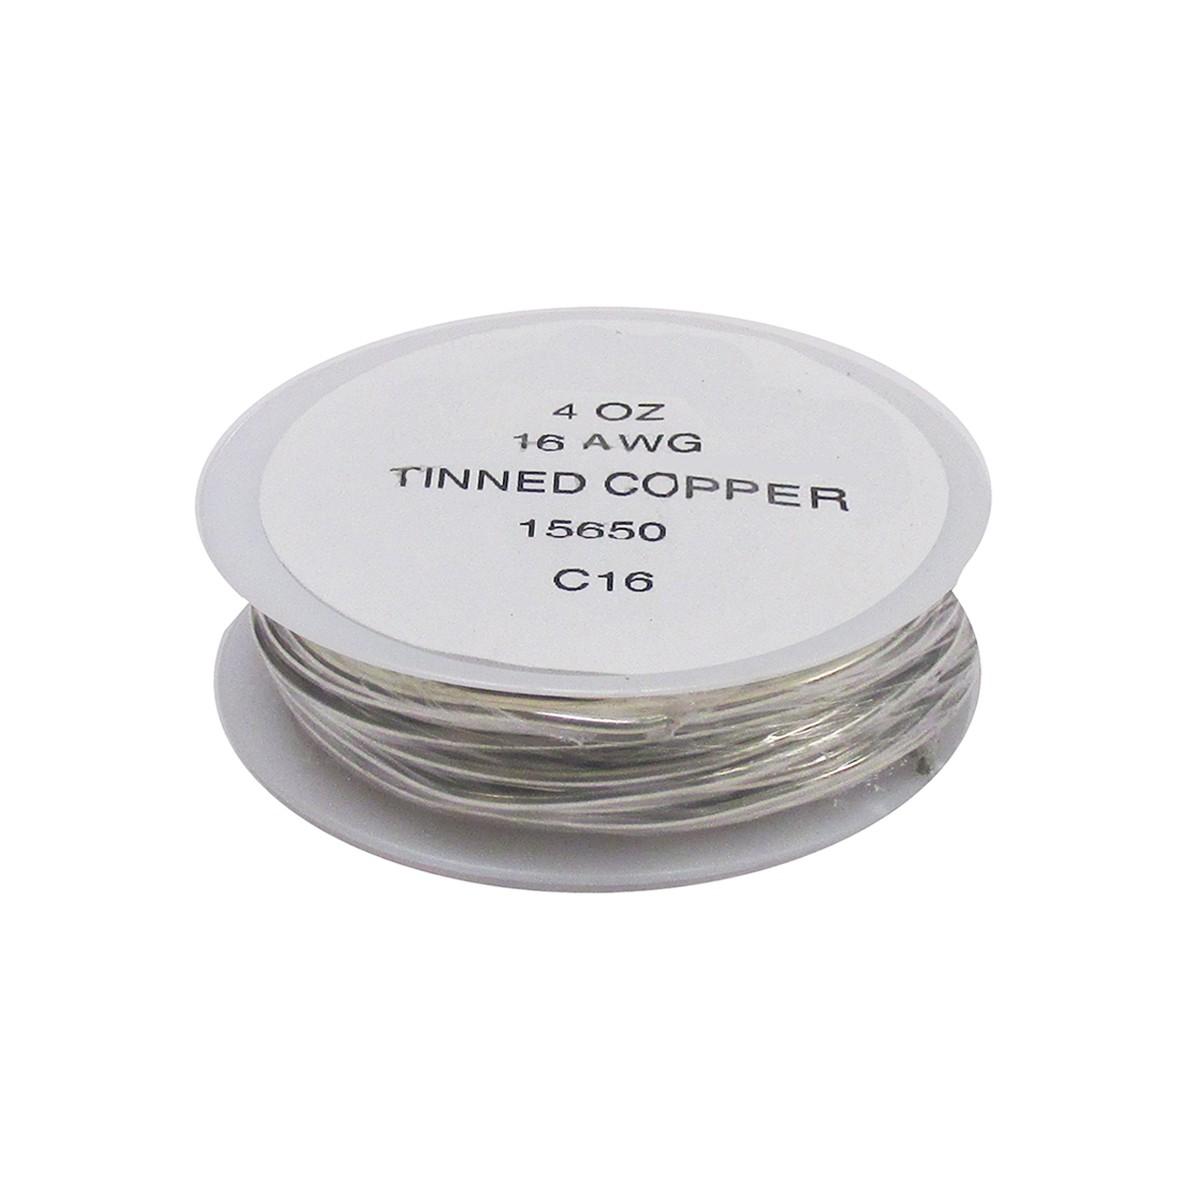 15650-Tinned Copper Wire 16 Gauge 4 oz.